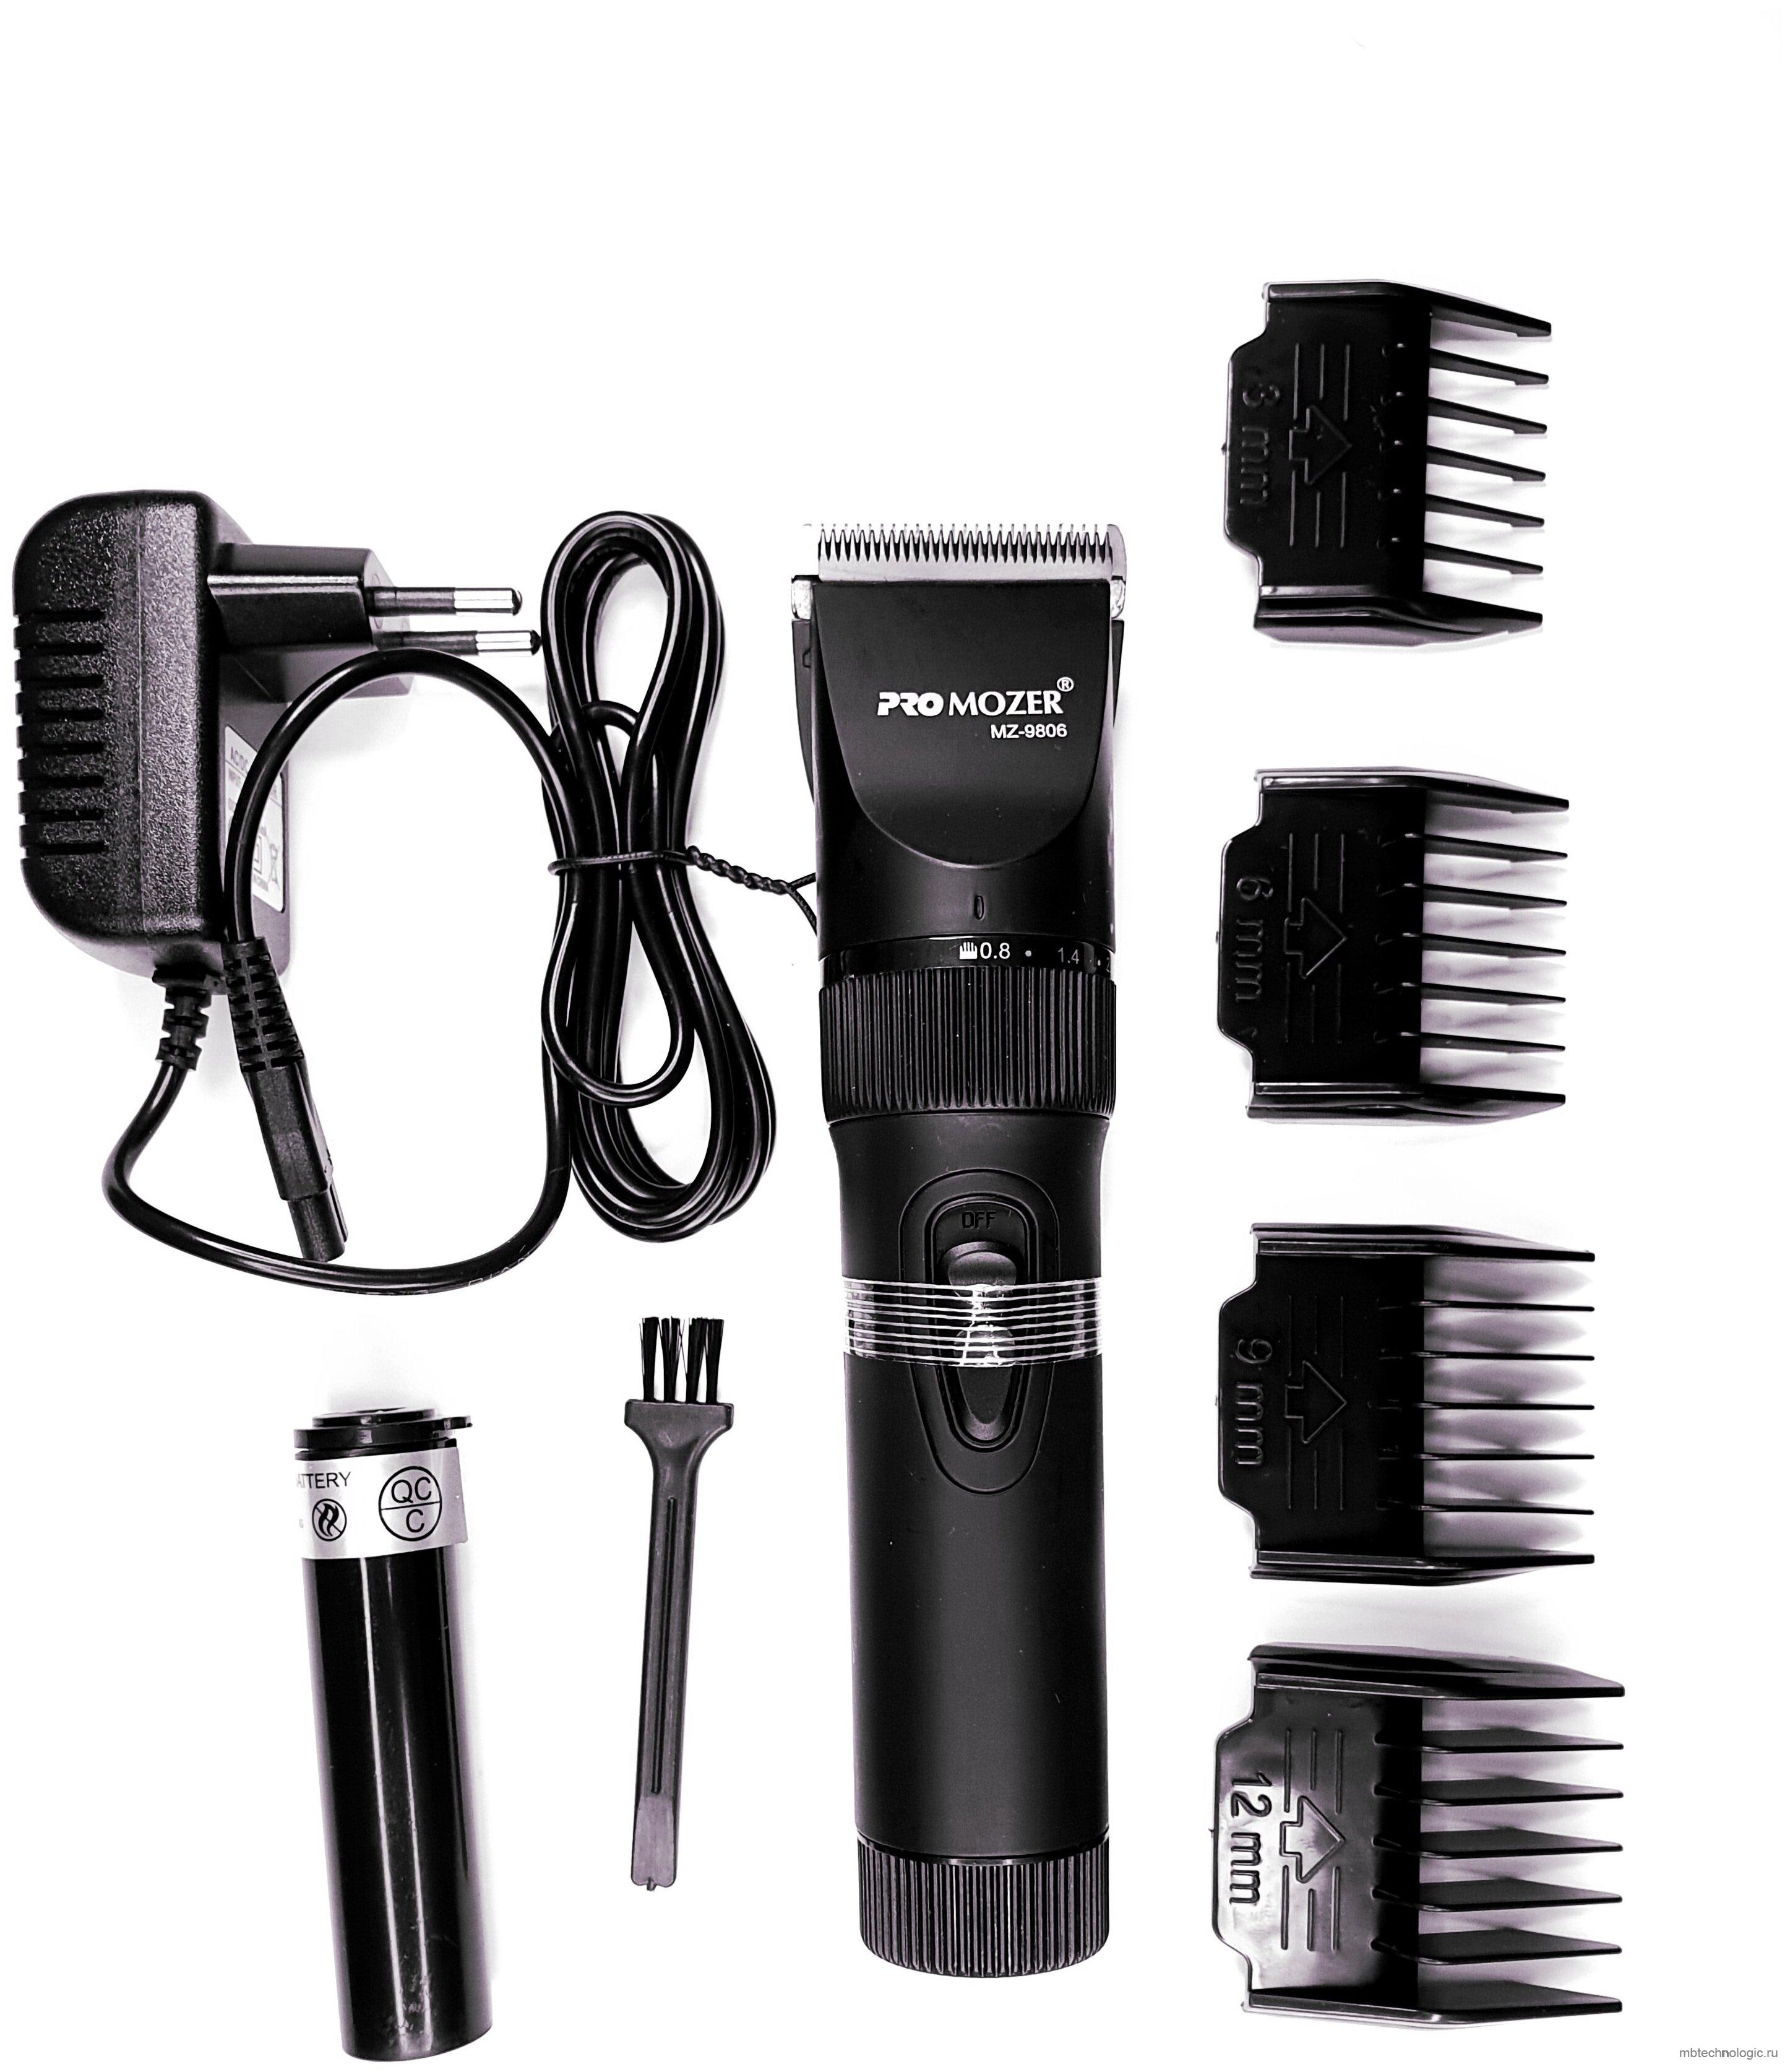 ProMozer стрижки волос Promozer MZ-9806